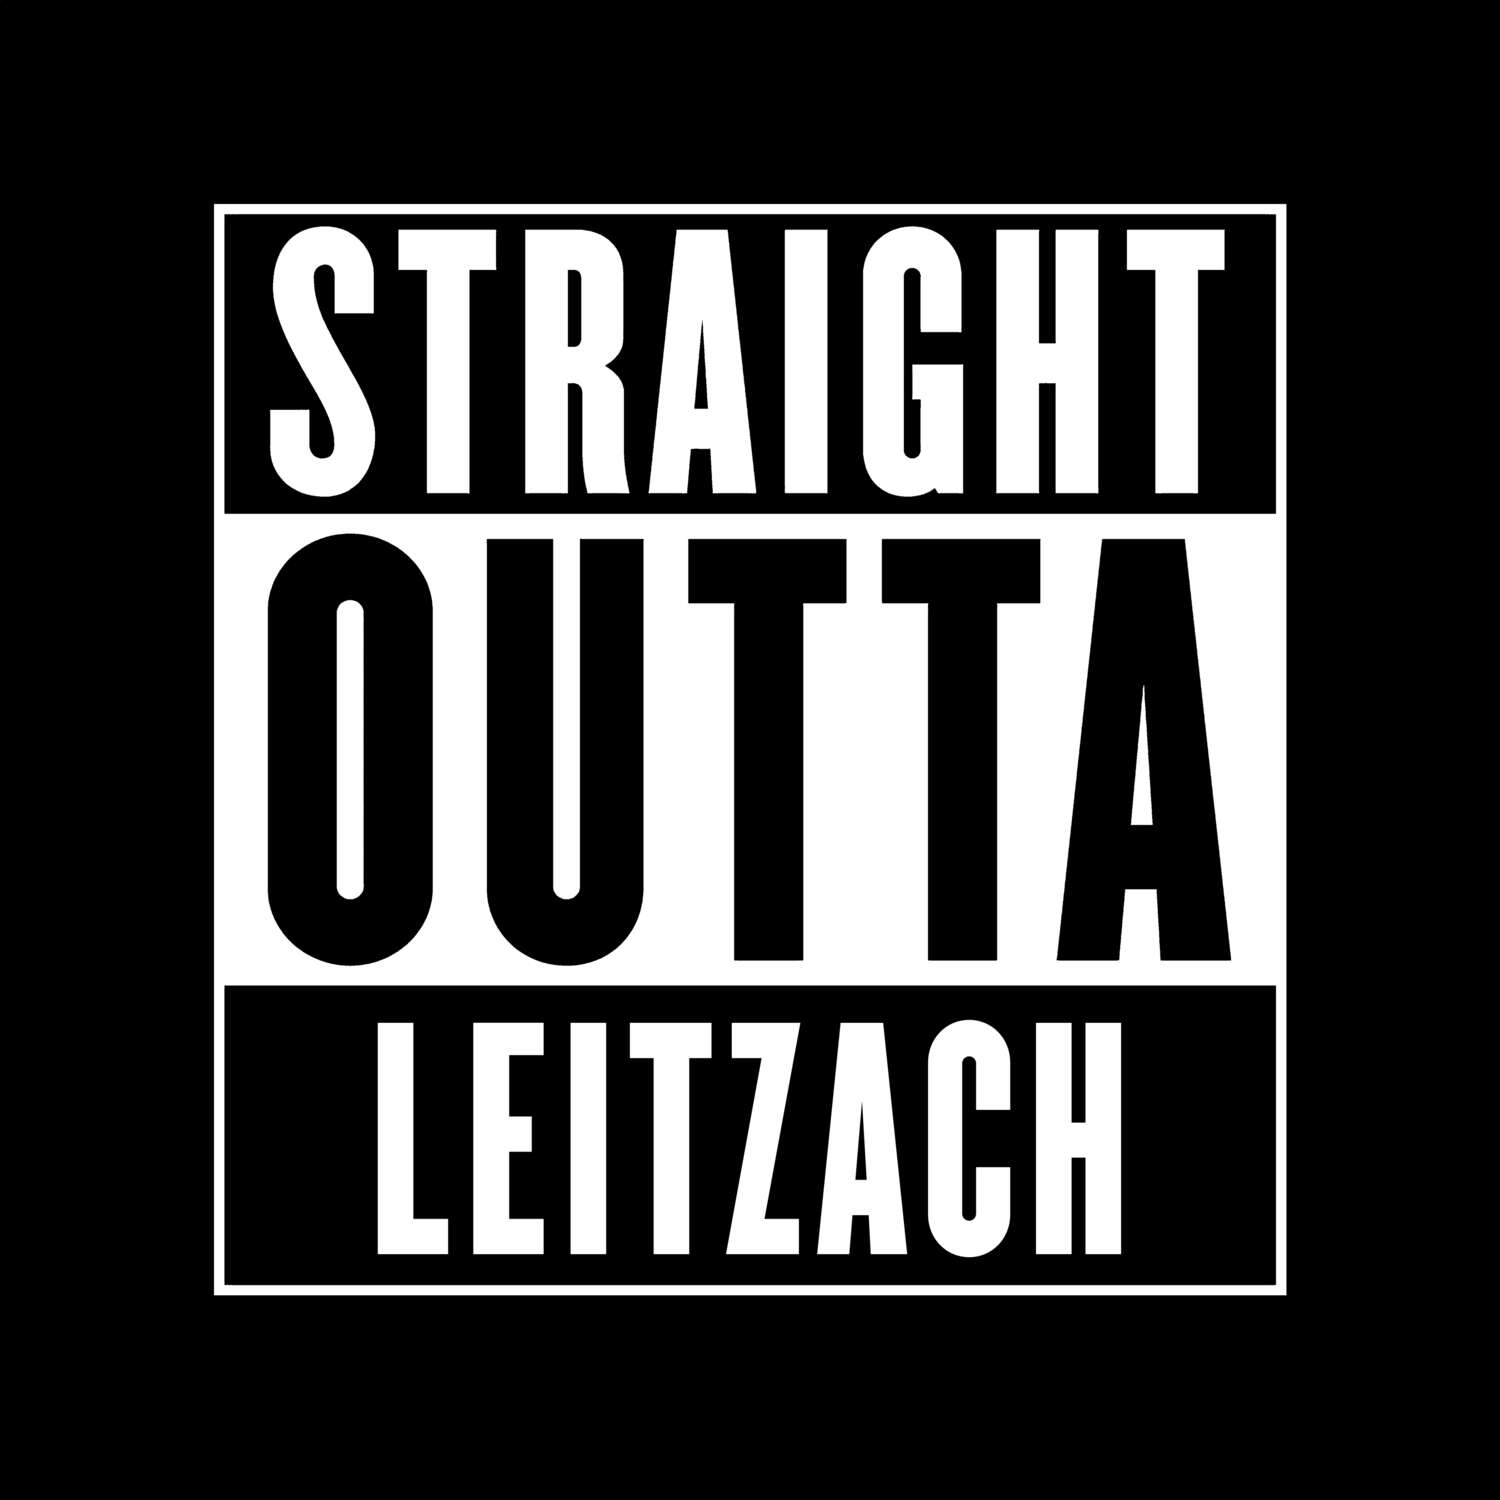 Leitzach T-Shirt »Straight Outta«